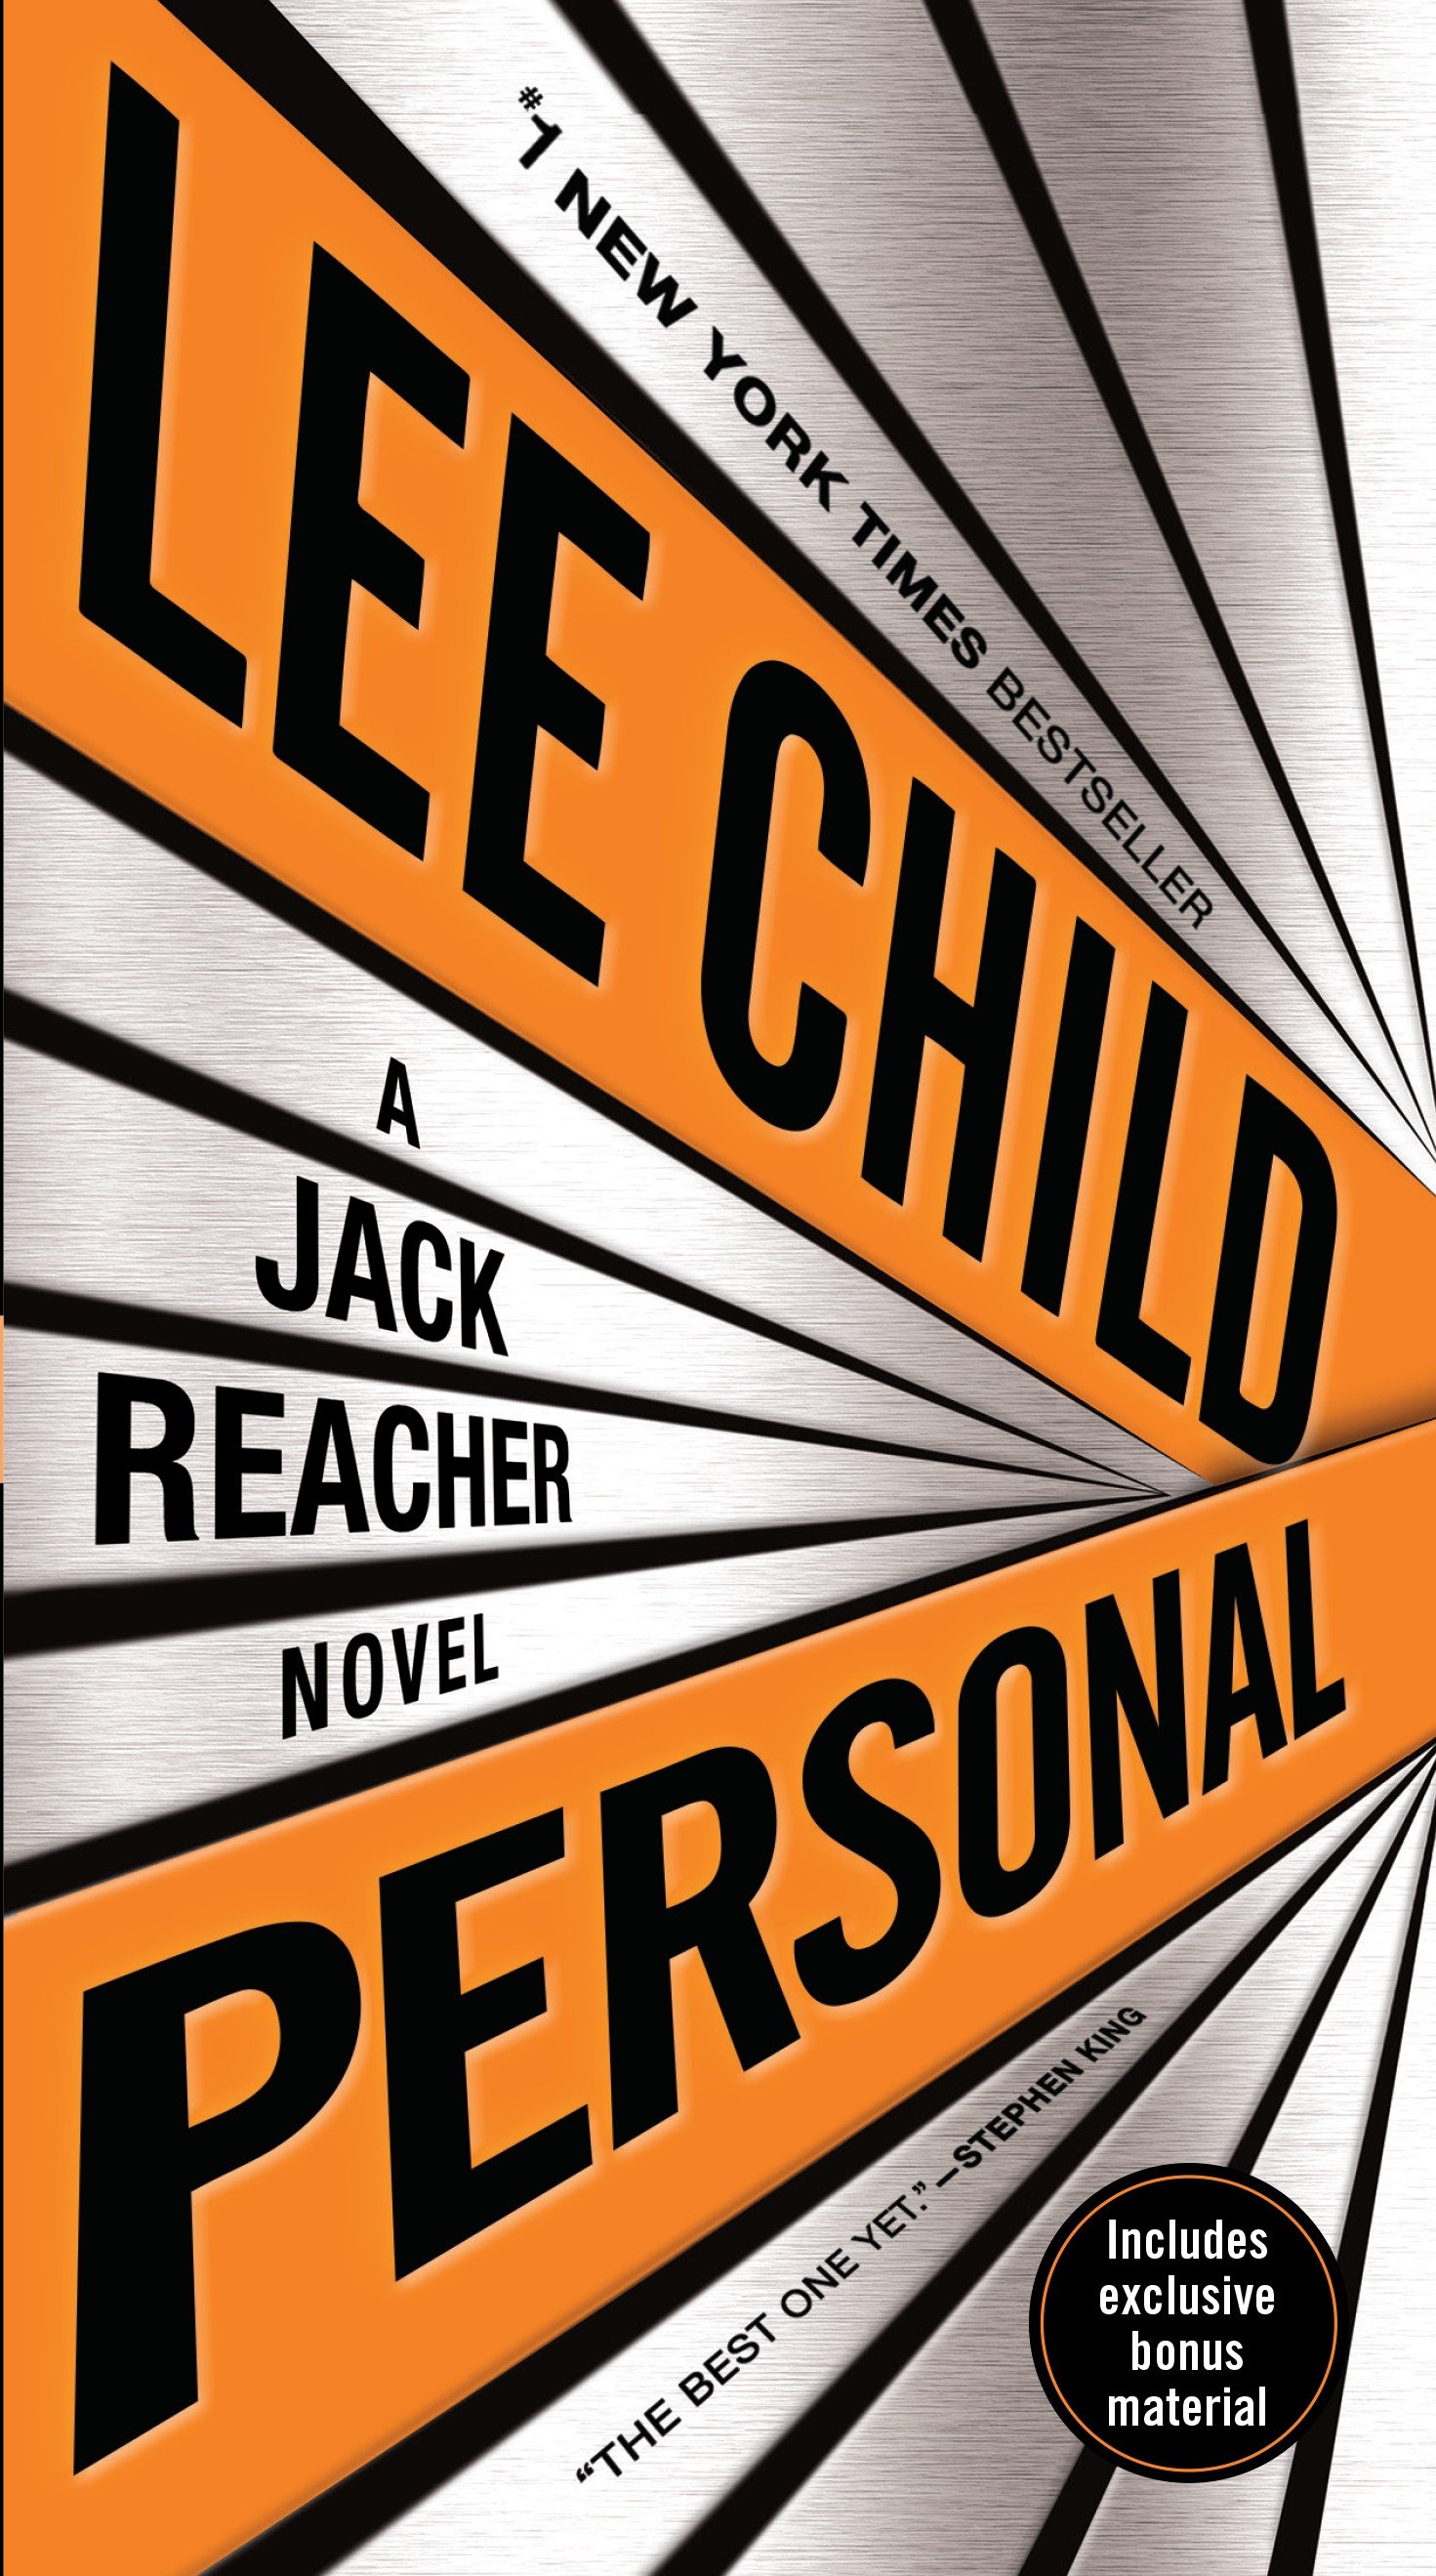 Jack Reacher: Personal : A Jack Reacher Novel (Series #19) (Paperback) - image 1 of 2